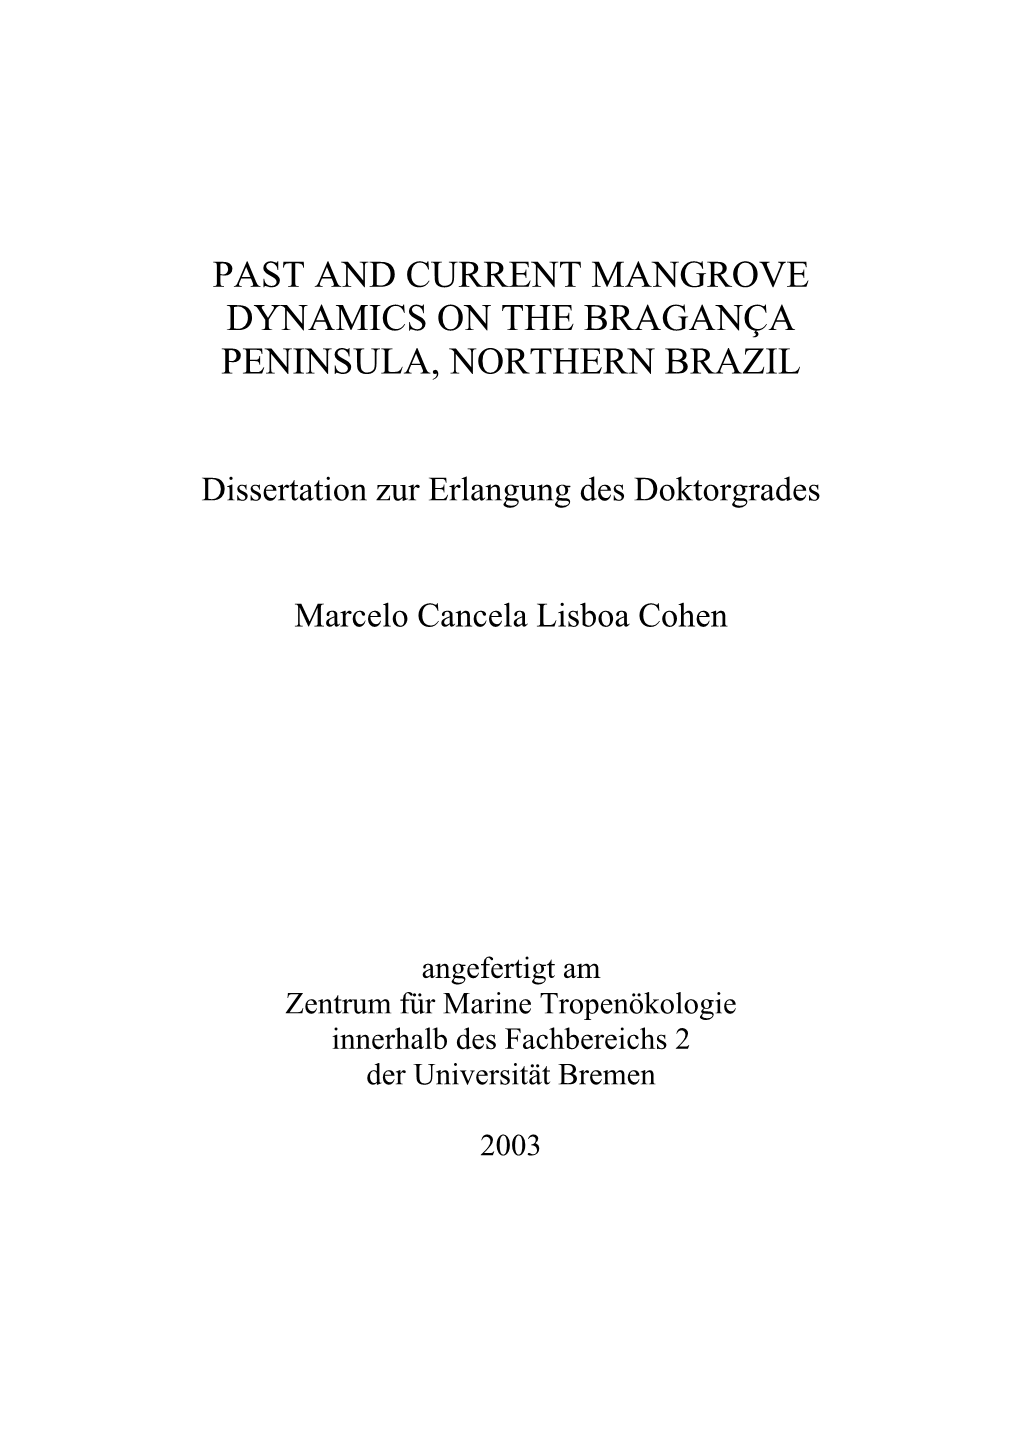 Past and Current Mangrove Dynamics on the Bragança Peninsula, Northern Brazil